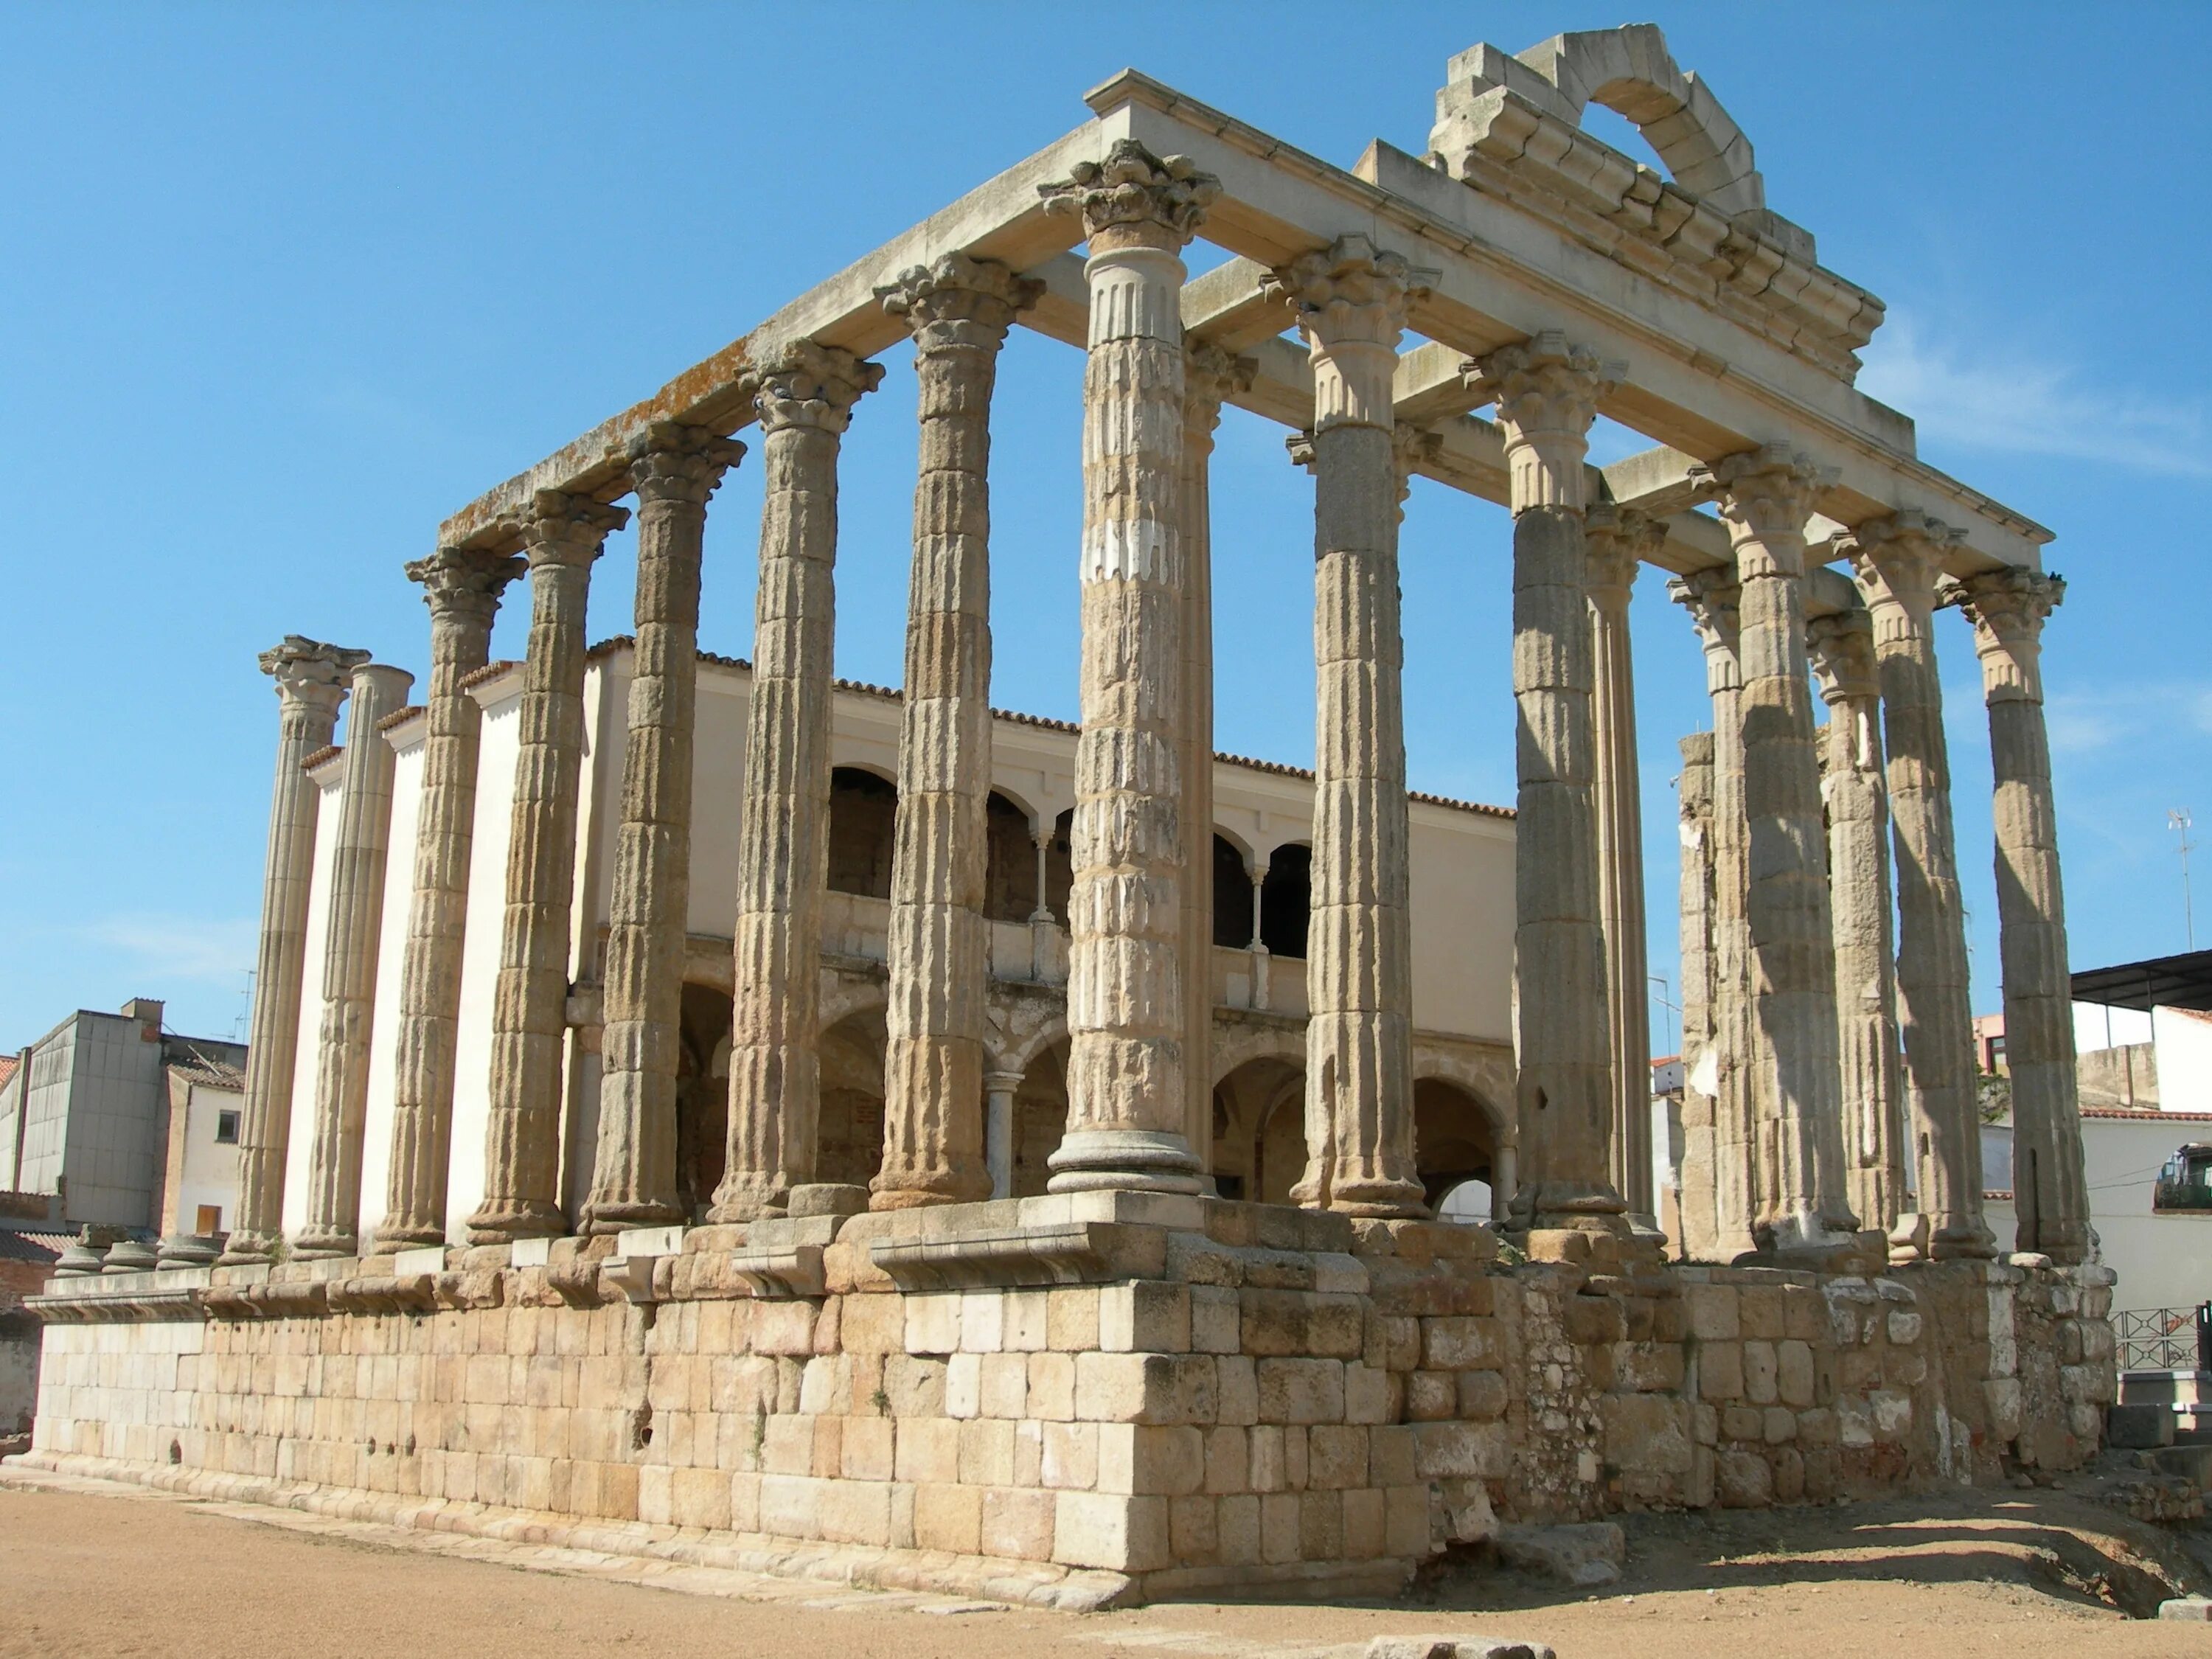 The temple of artemis